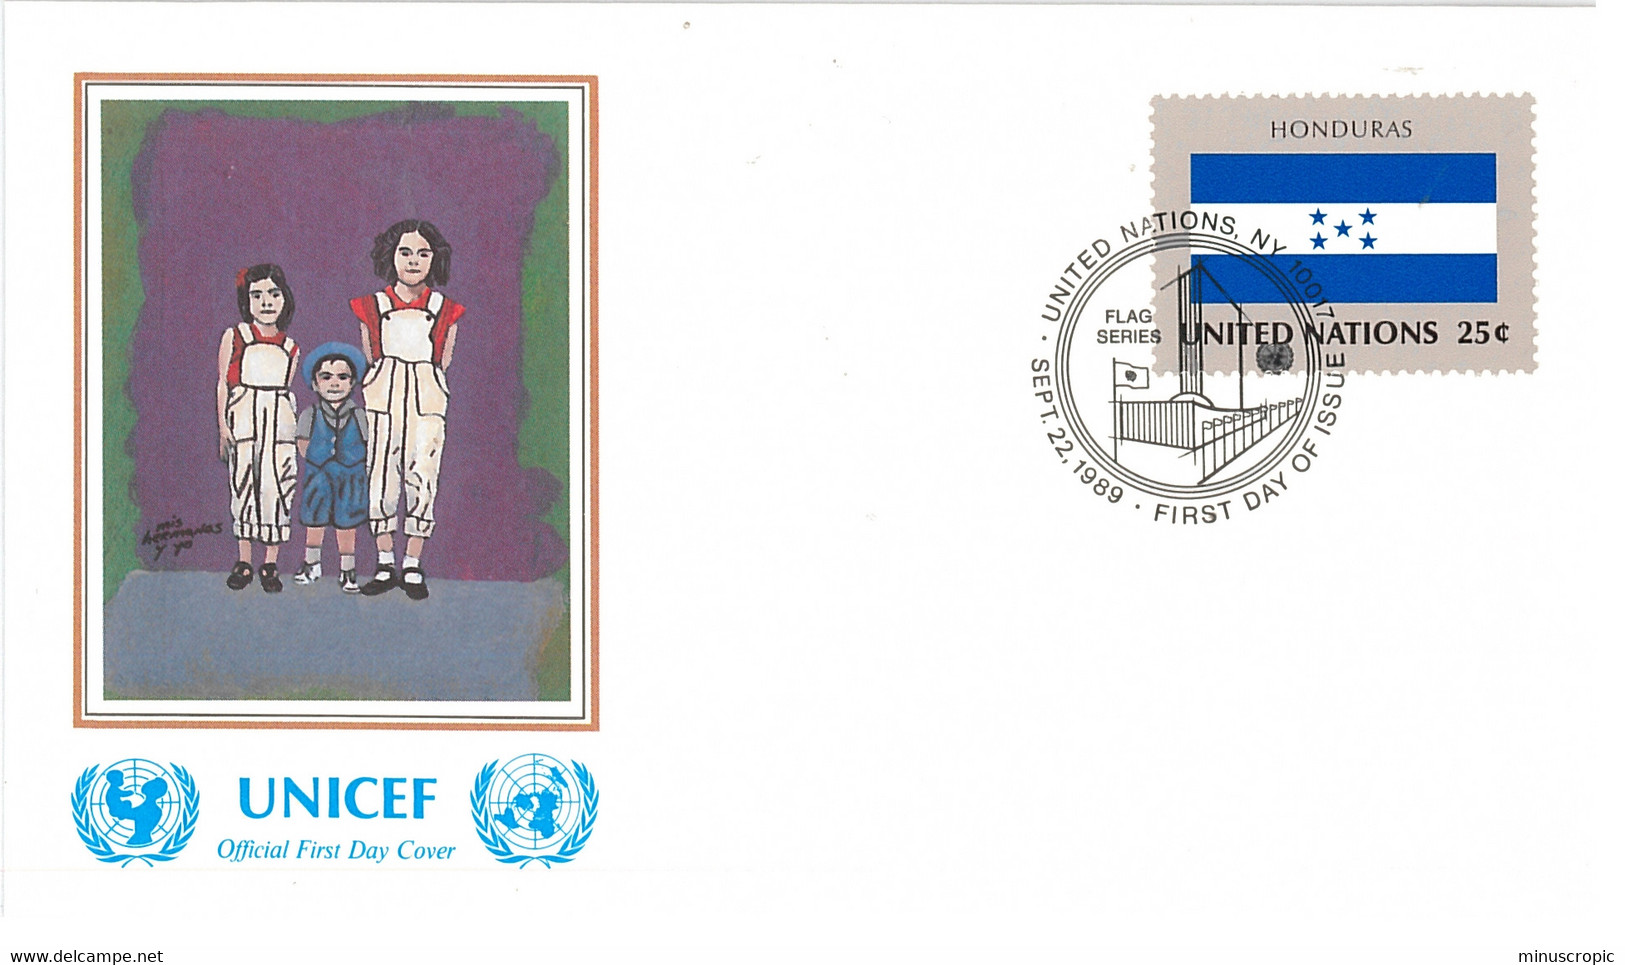 Enveloppe FDC United Nations - UNICEF - Flag Series 7/89 - Honduras - 1989 - Storia Postale